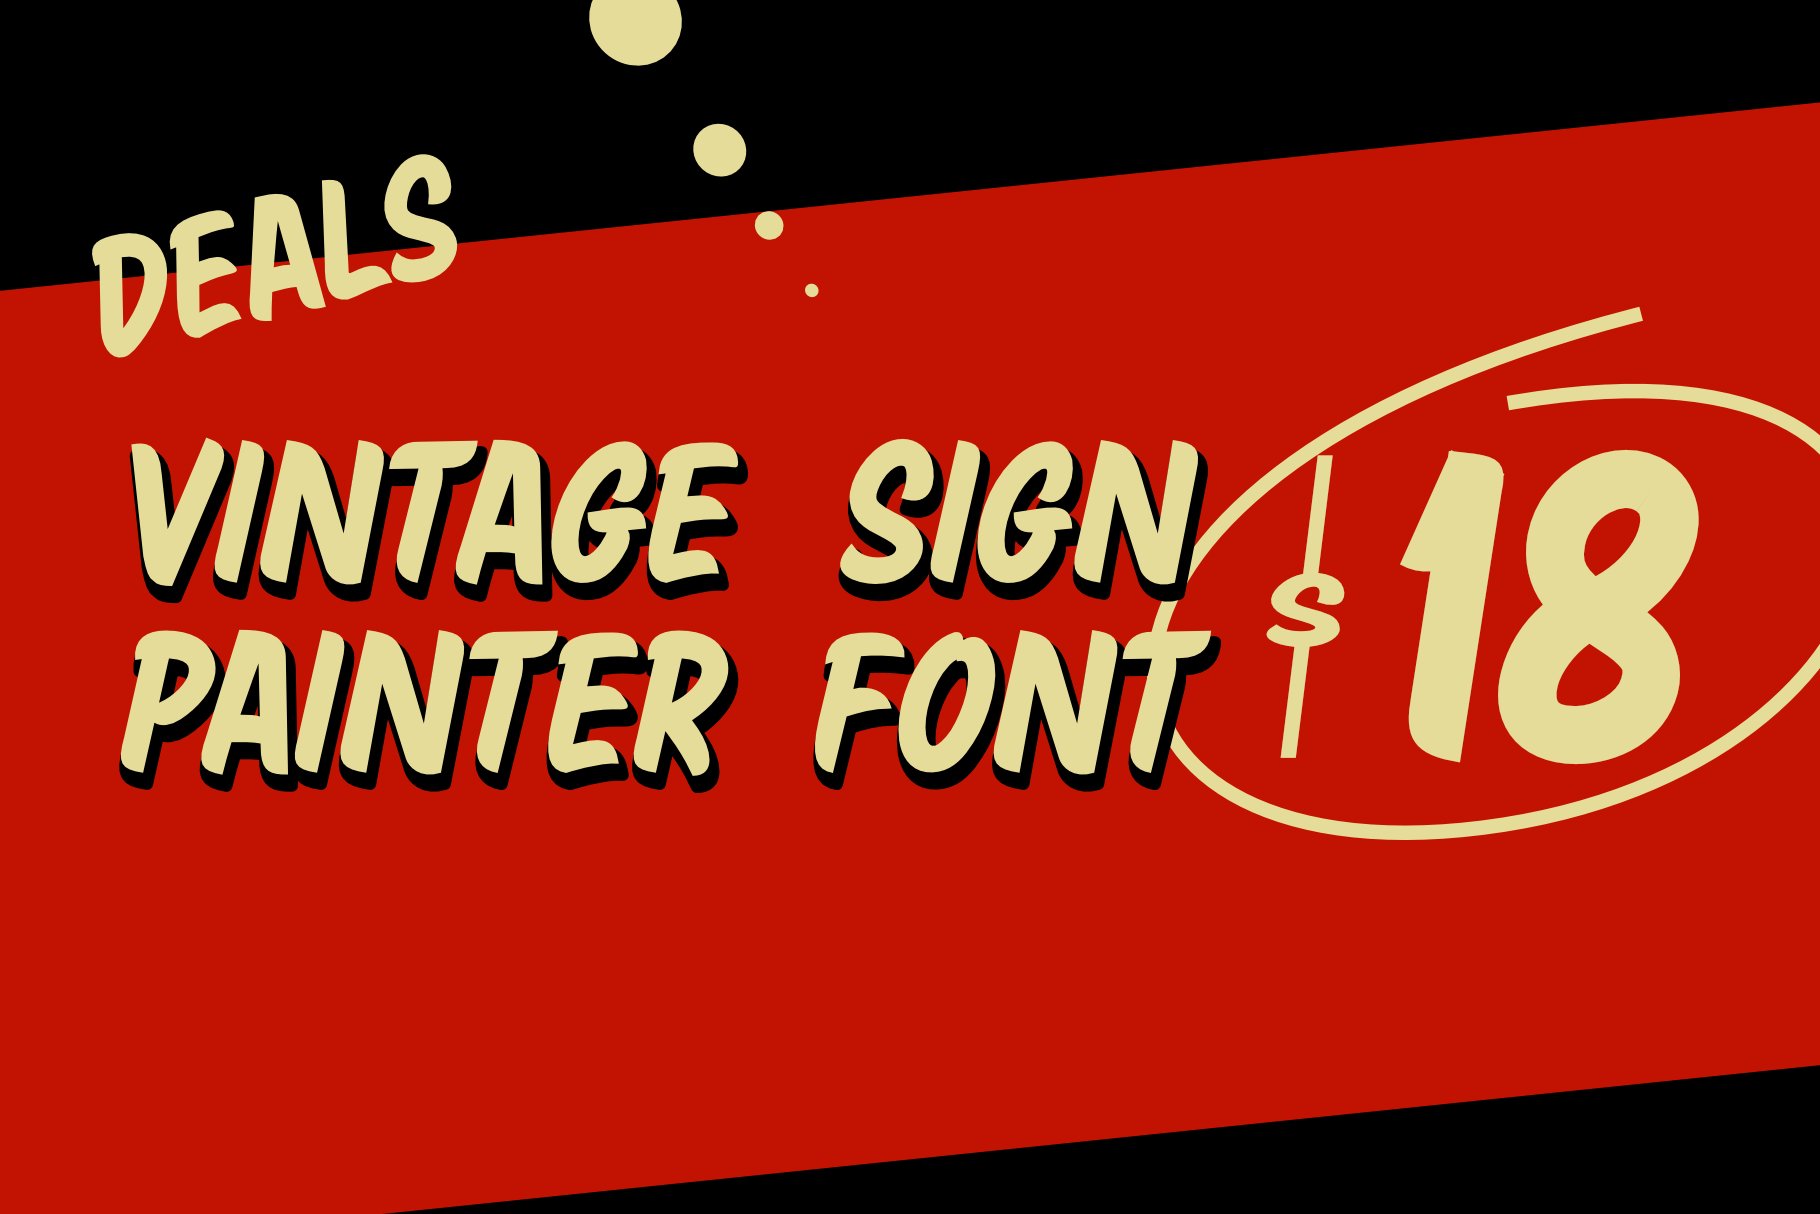 Deal | Vintage Sign Painter Font cover image.